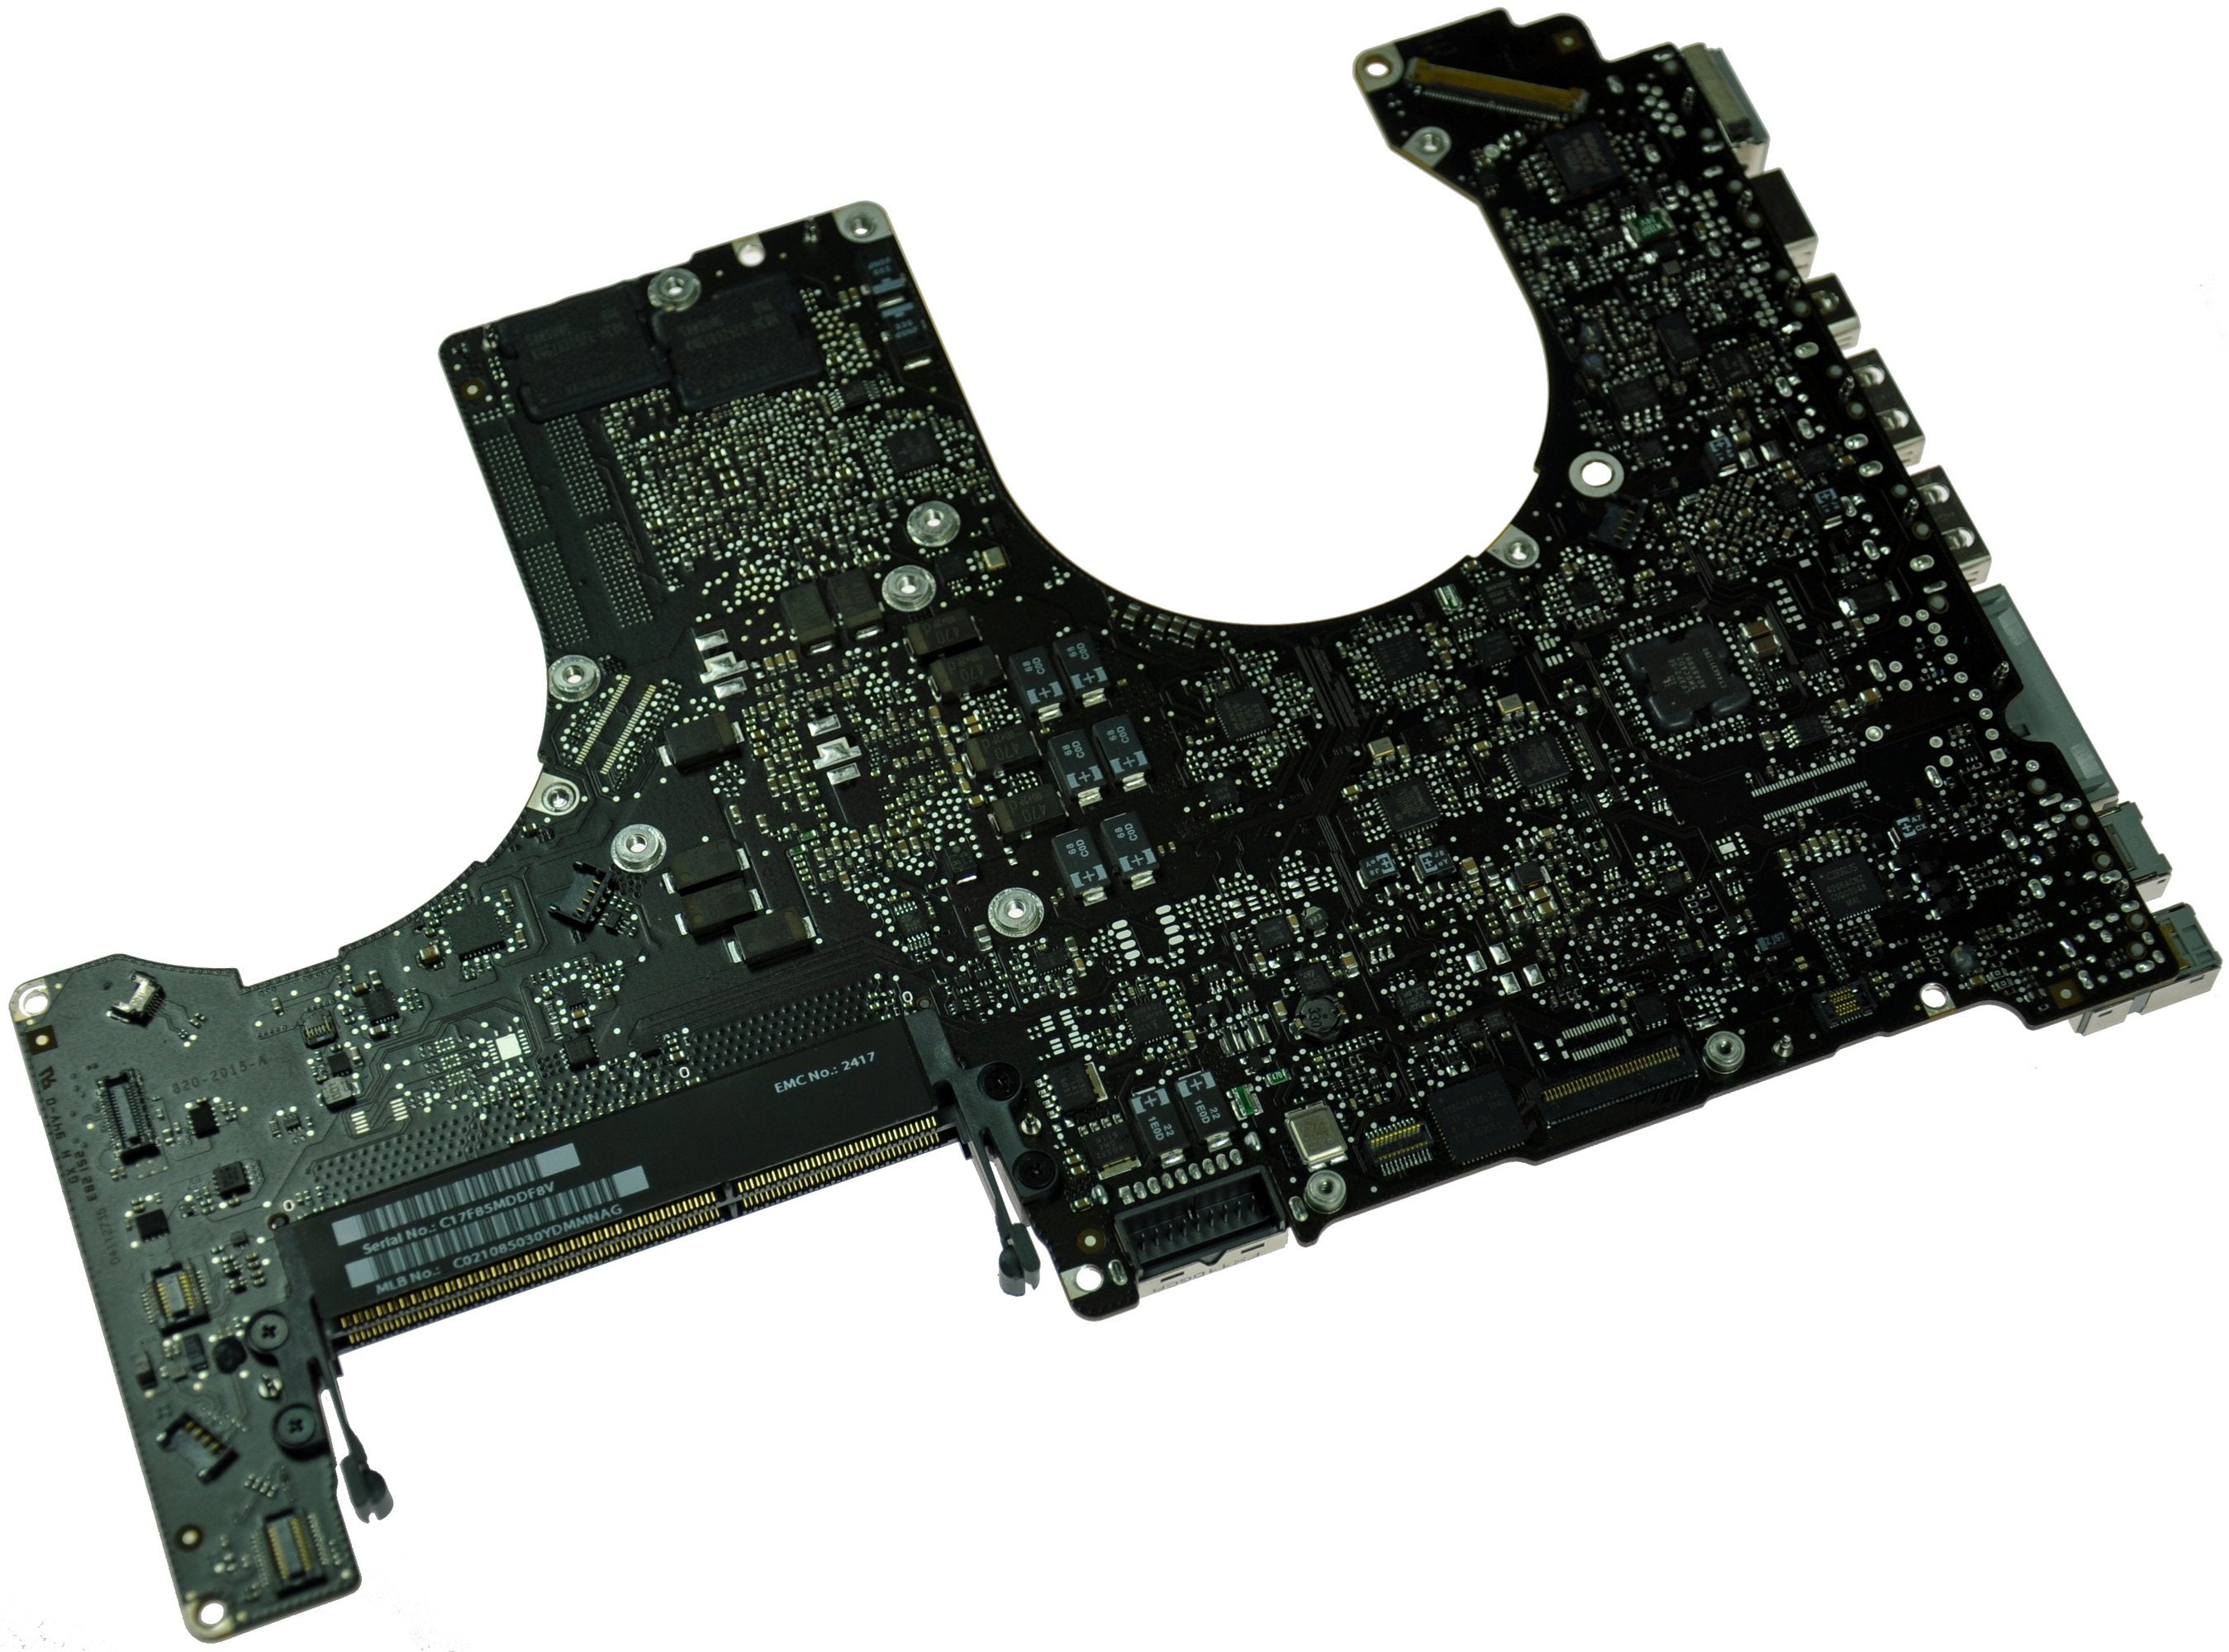 MacBook Pro 15" Unibody (Early 2011) 2.0 GHz Logic Board